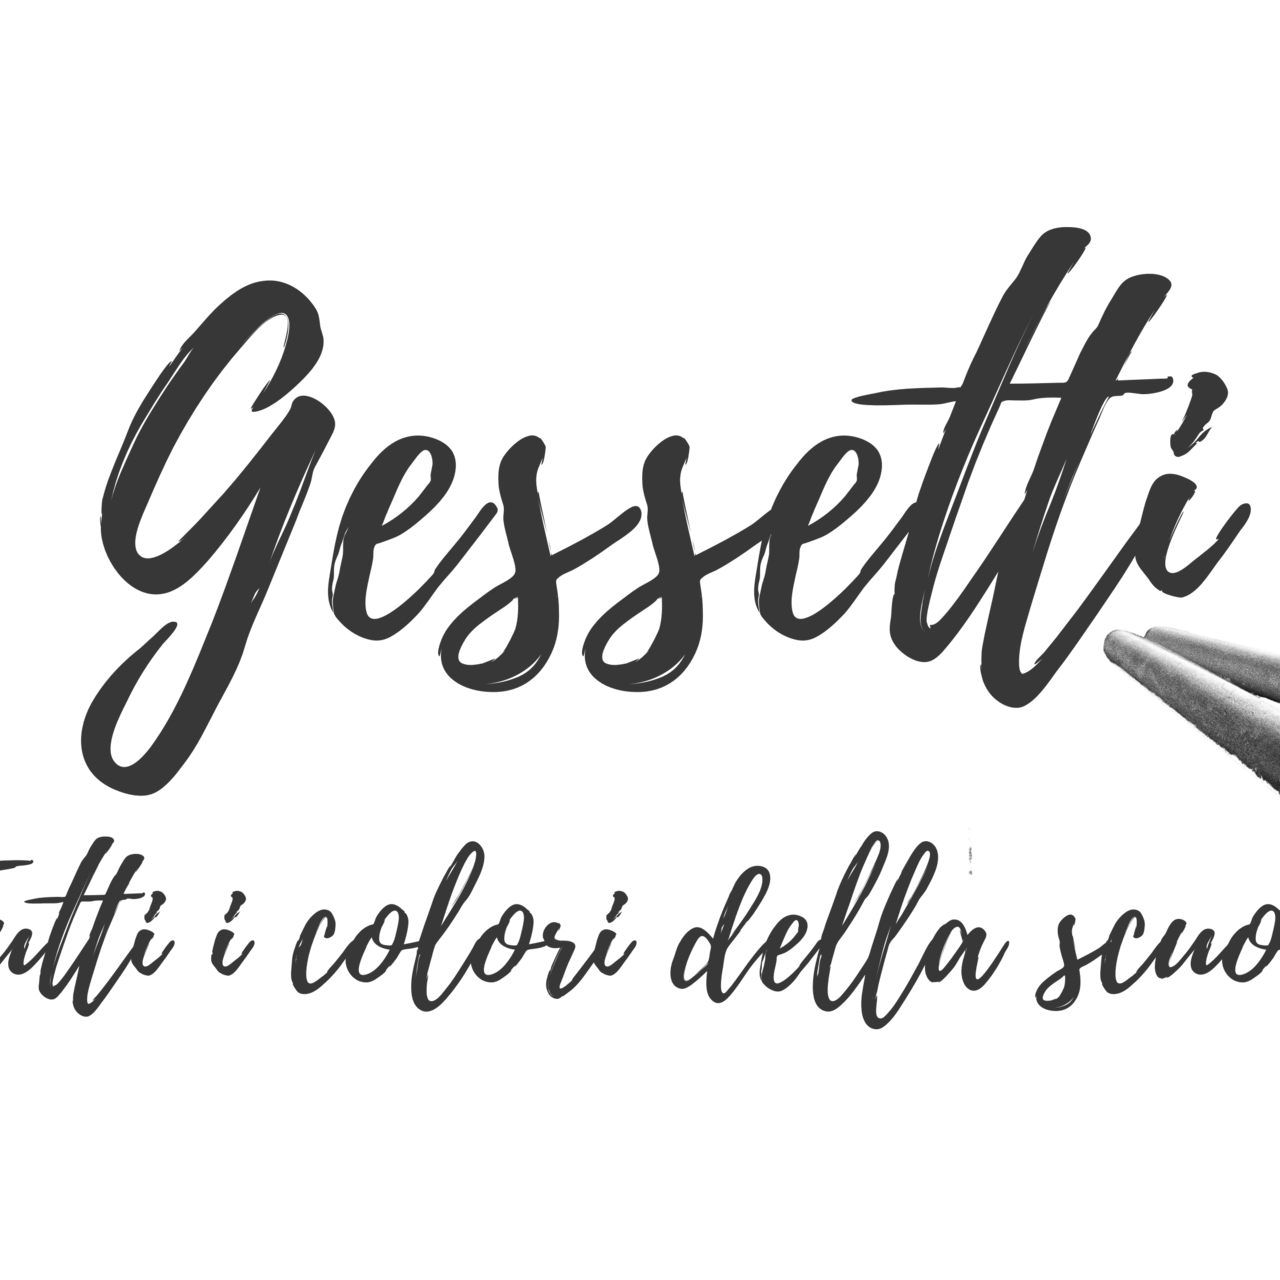 Artwork for Gessetti